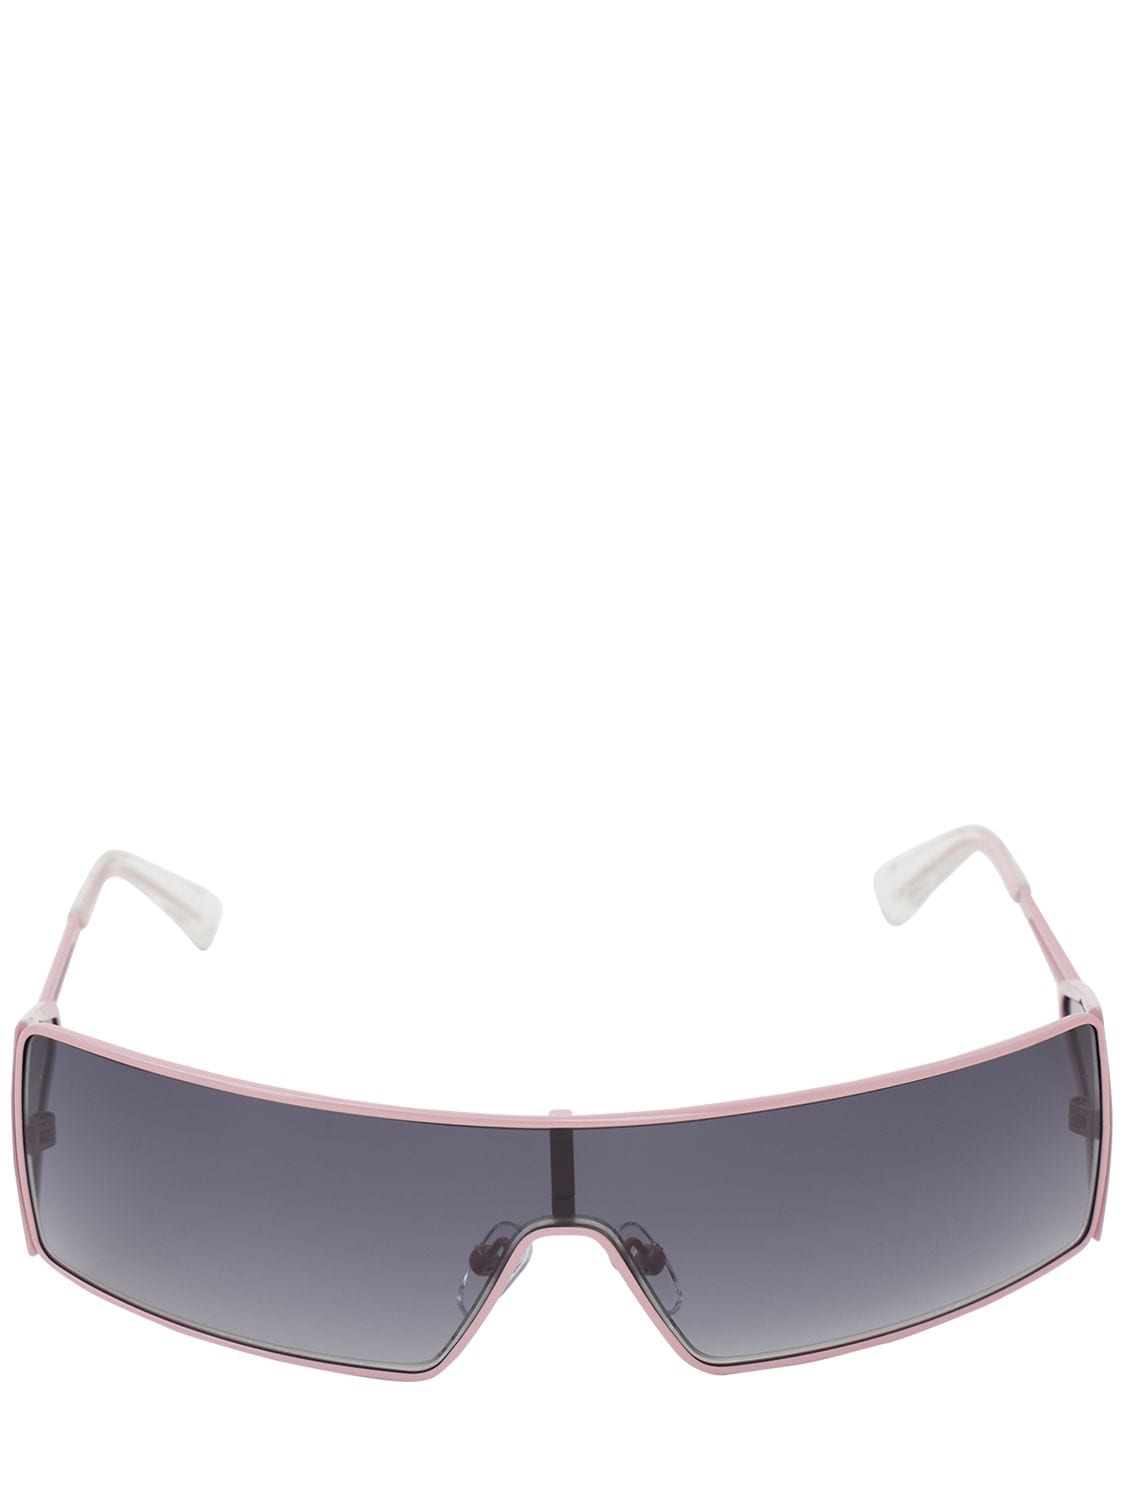 Adam Selman The Luxx Squared Sunglasses